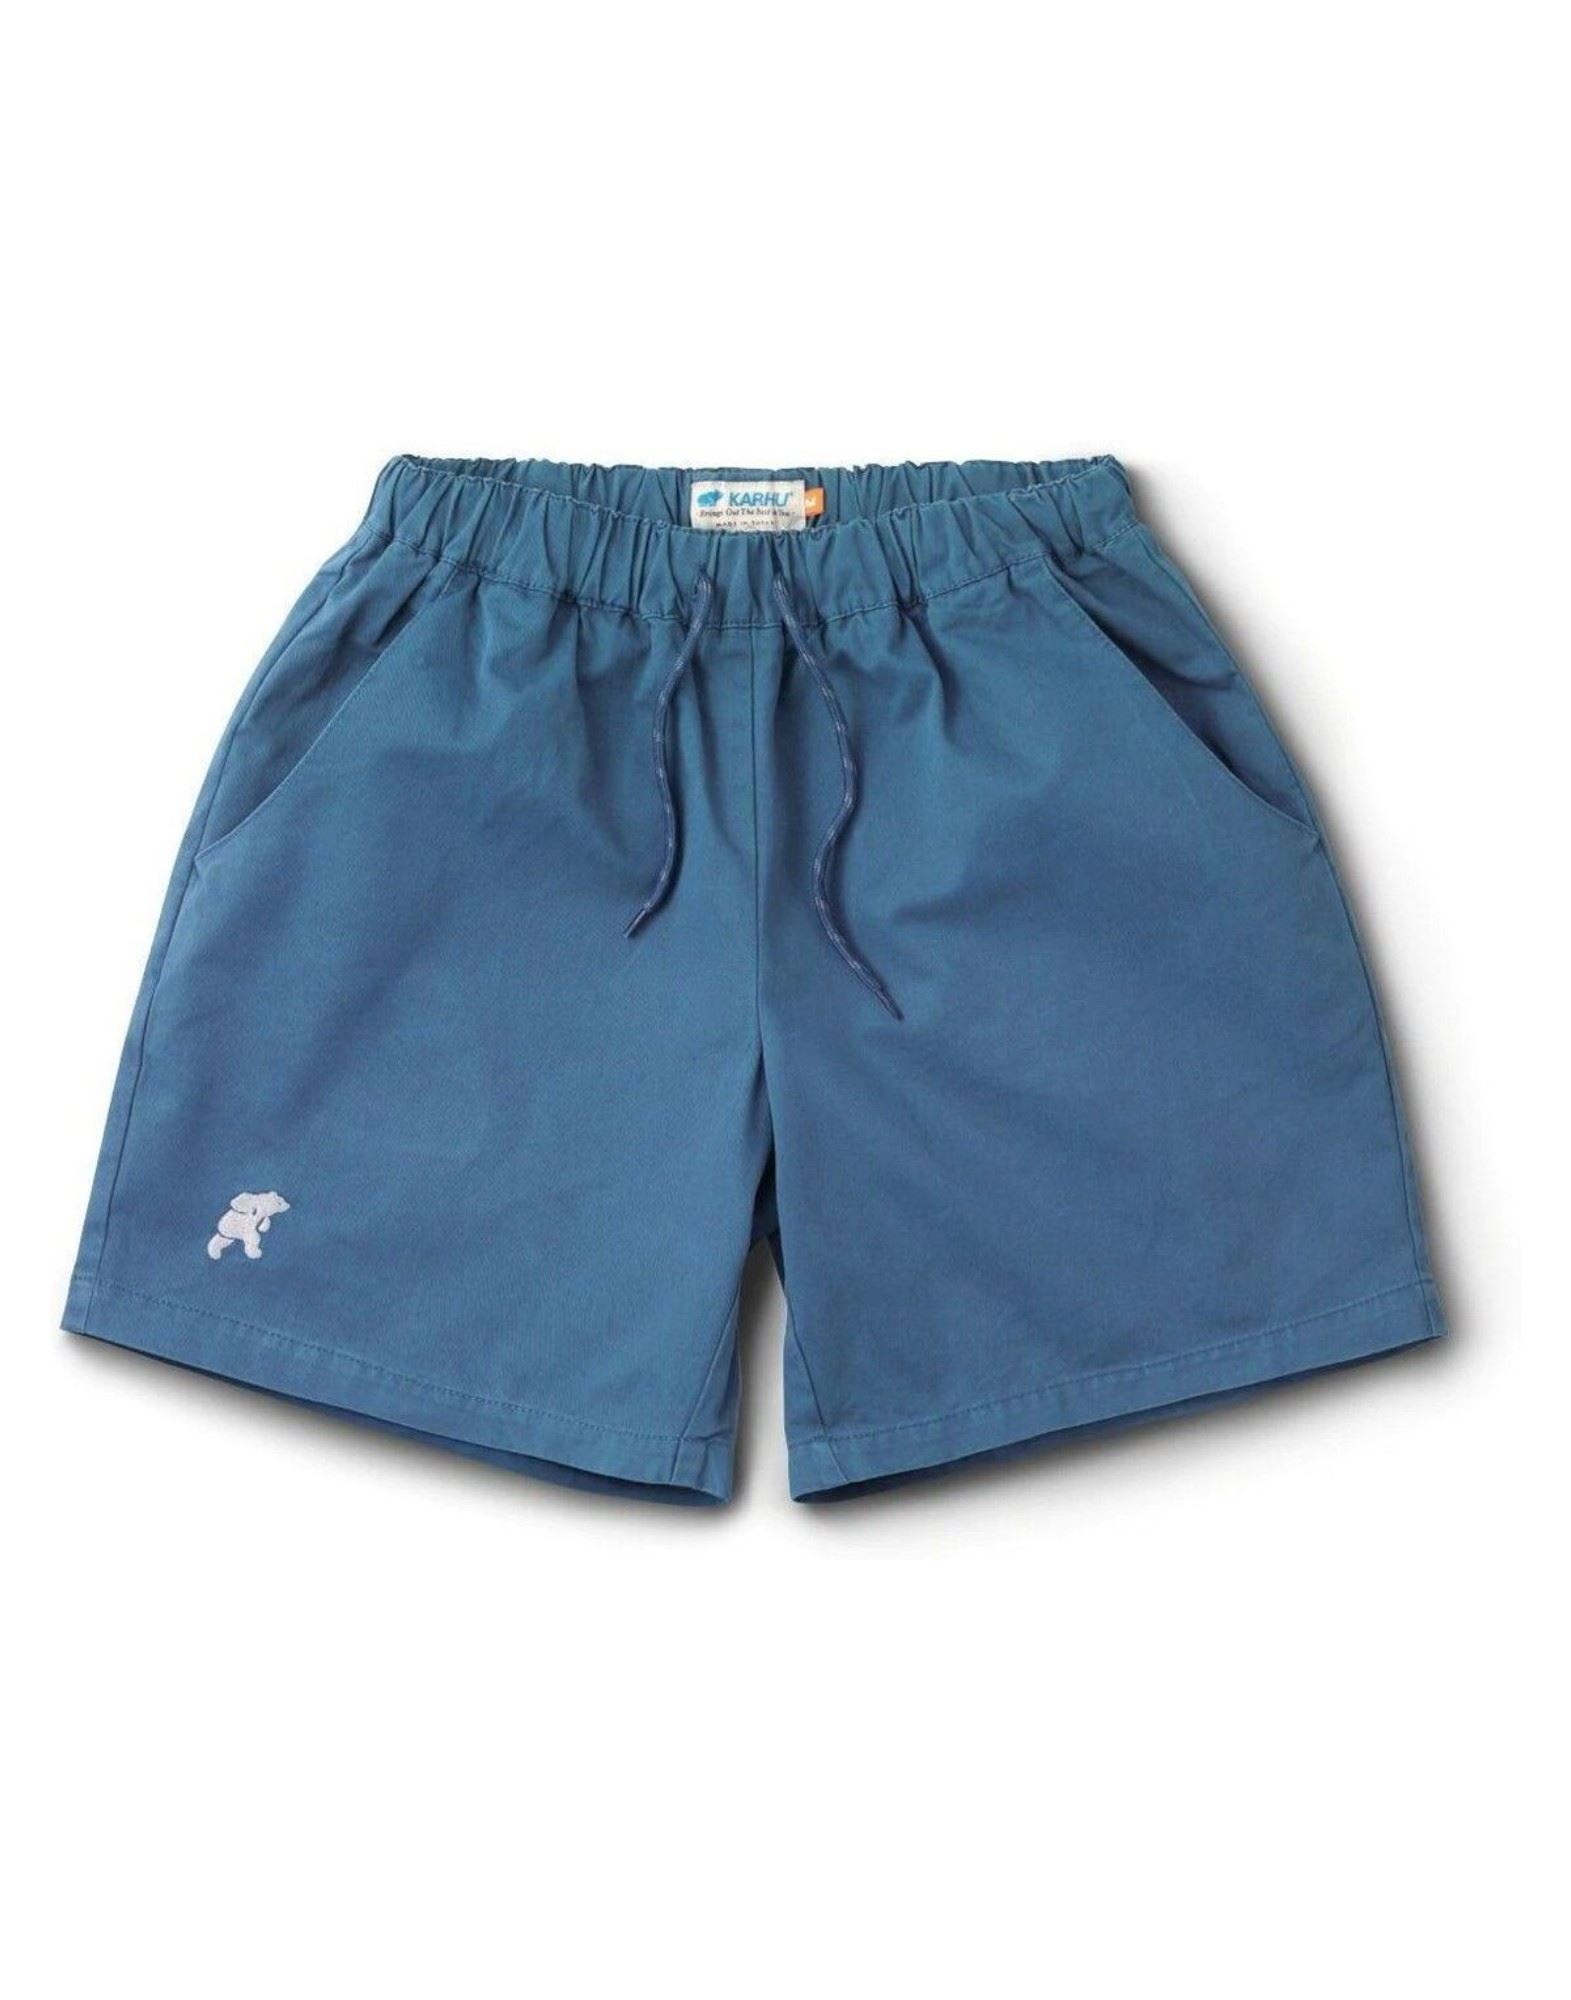 KARHU Shorts & Bermudashorts Herren Blau von KARHU